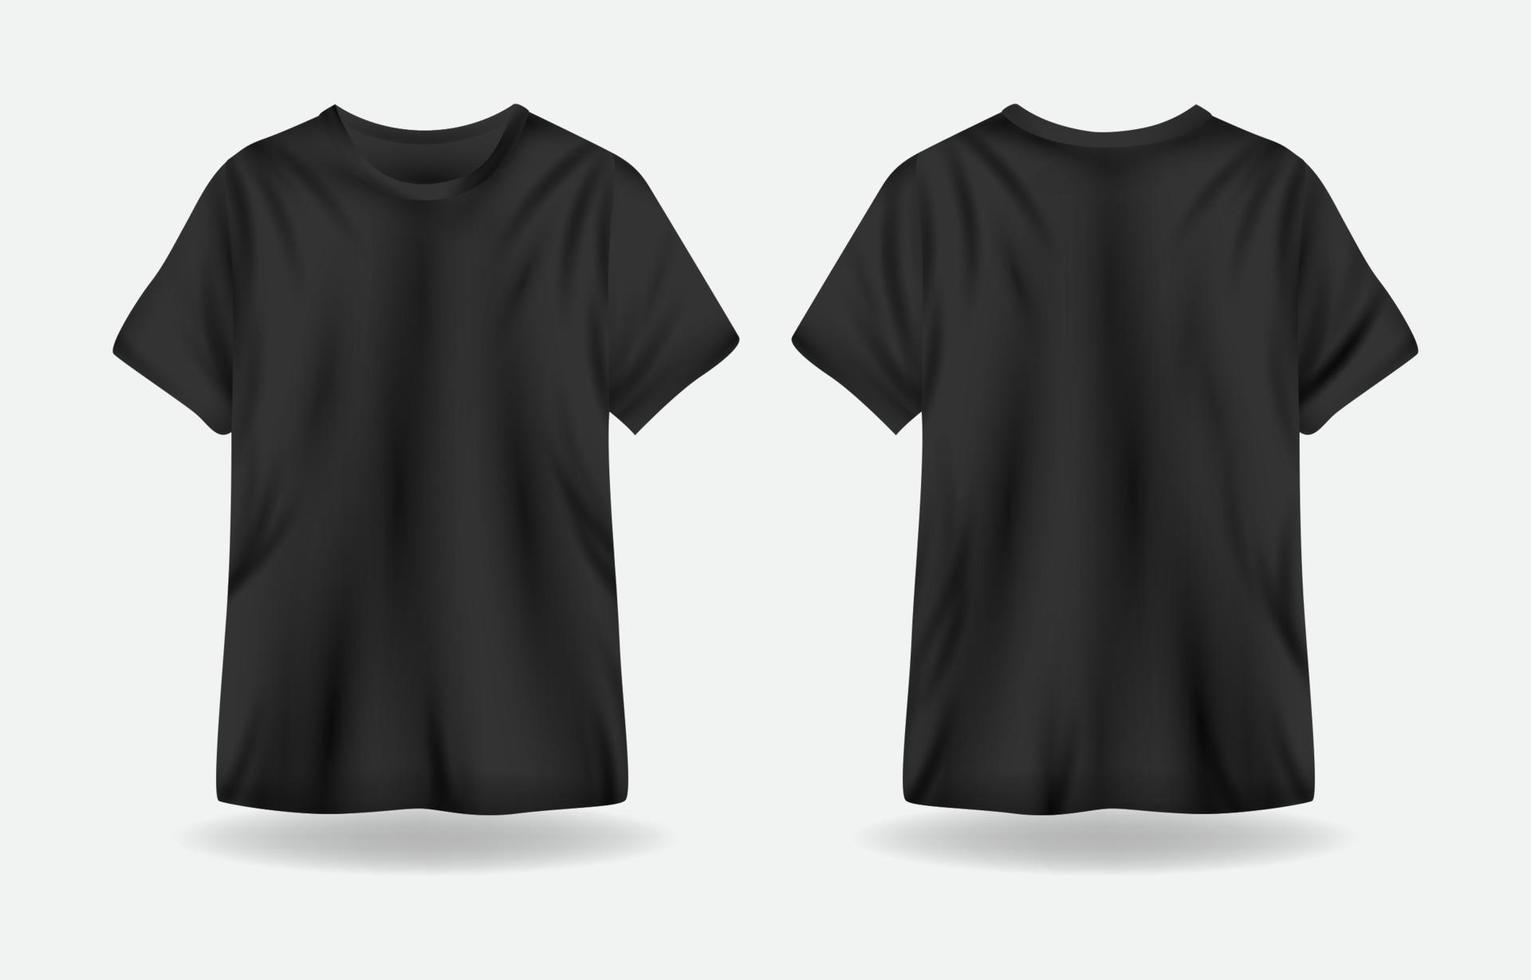 schwarz 3d T-Shirt Attrappe, Lehrmodell, Simulation vektor